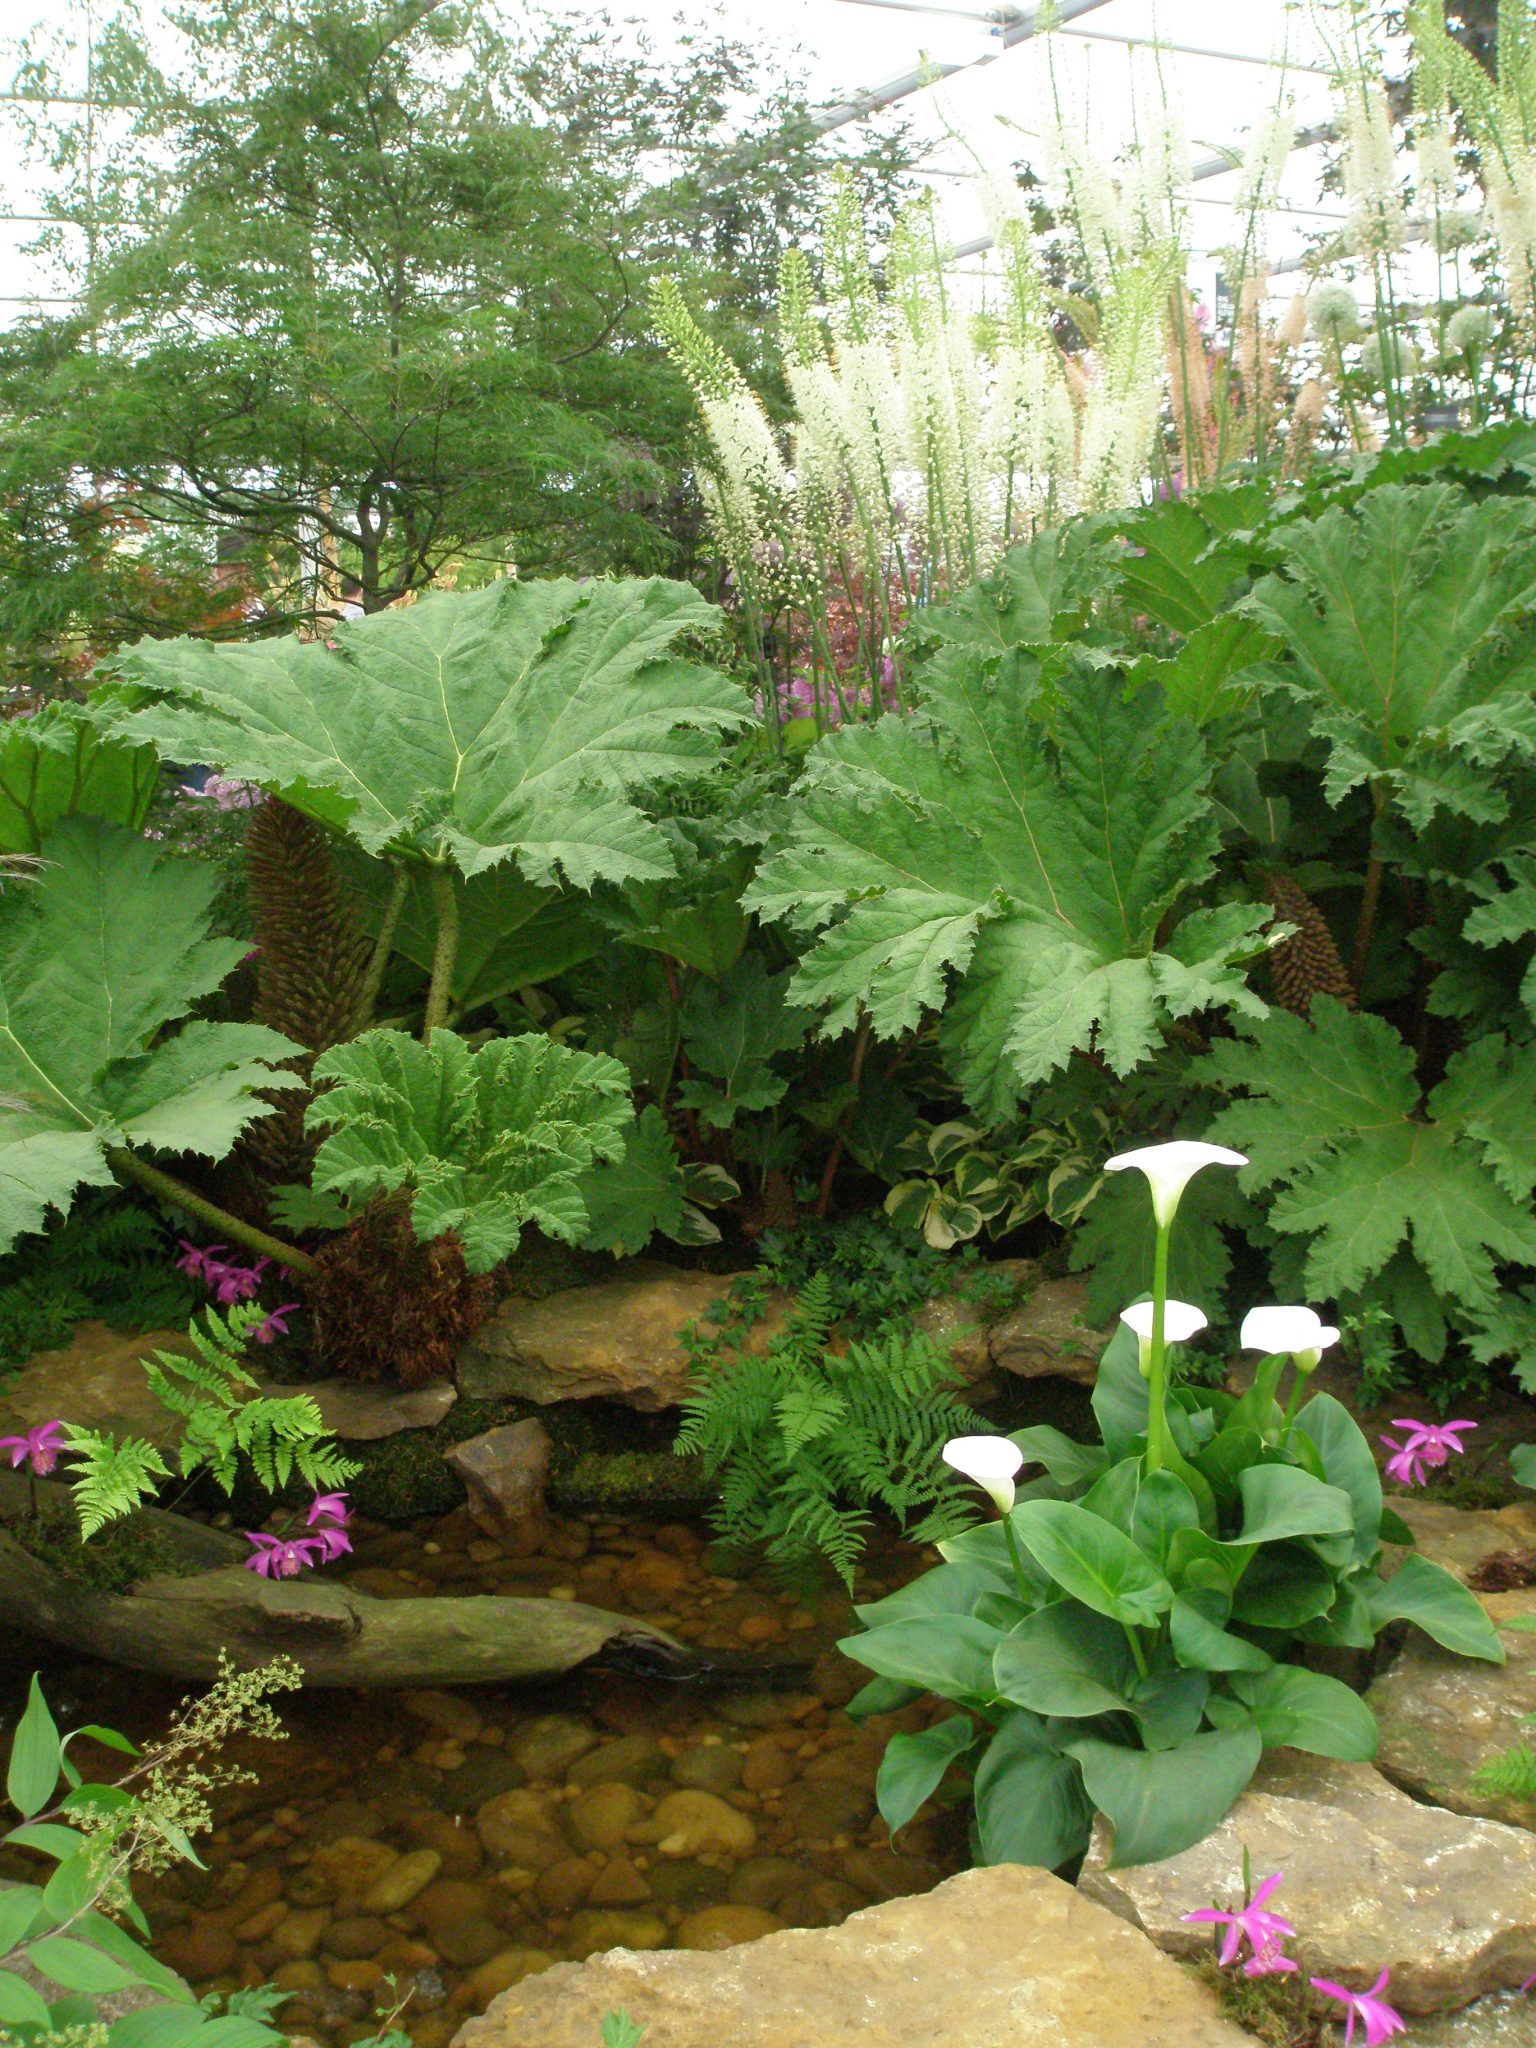 Water-loving plants